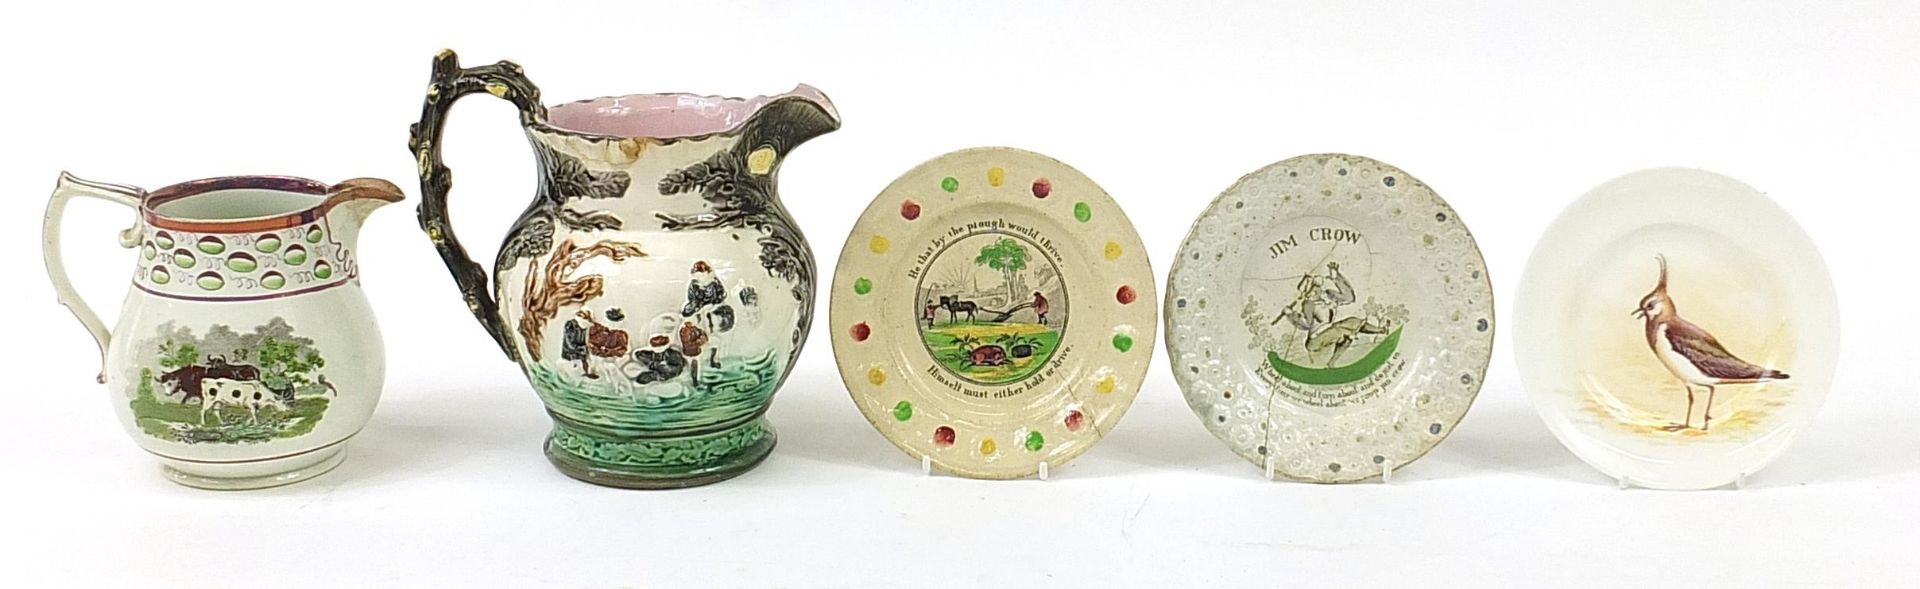 Victorian ceramics including a Majolica jug and lustre jug, the largest 19.5cm high